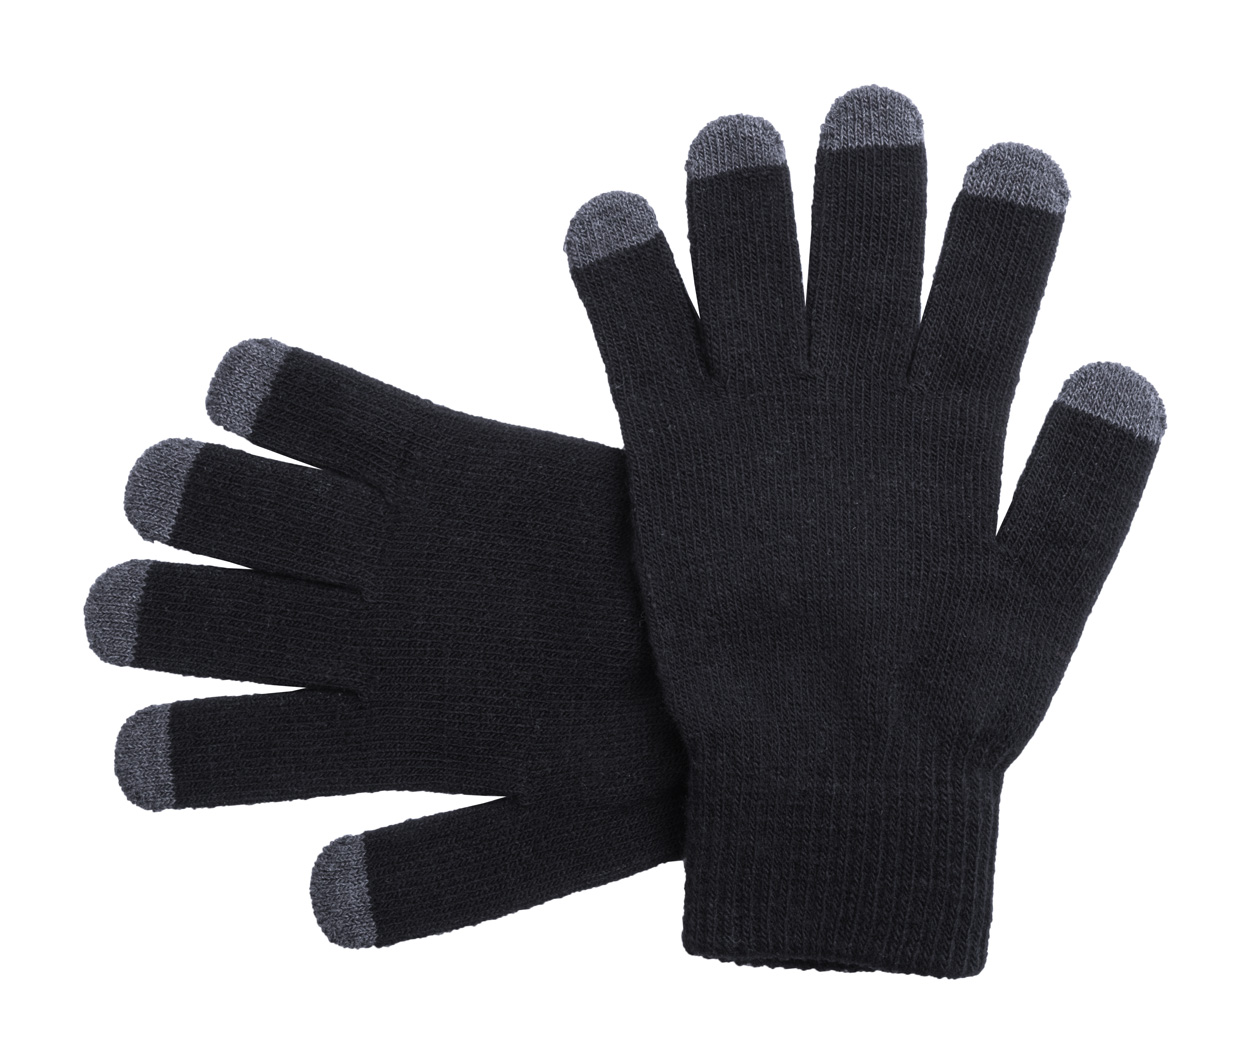 Winter gloves TELLAR for touchscreens